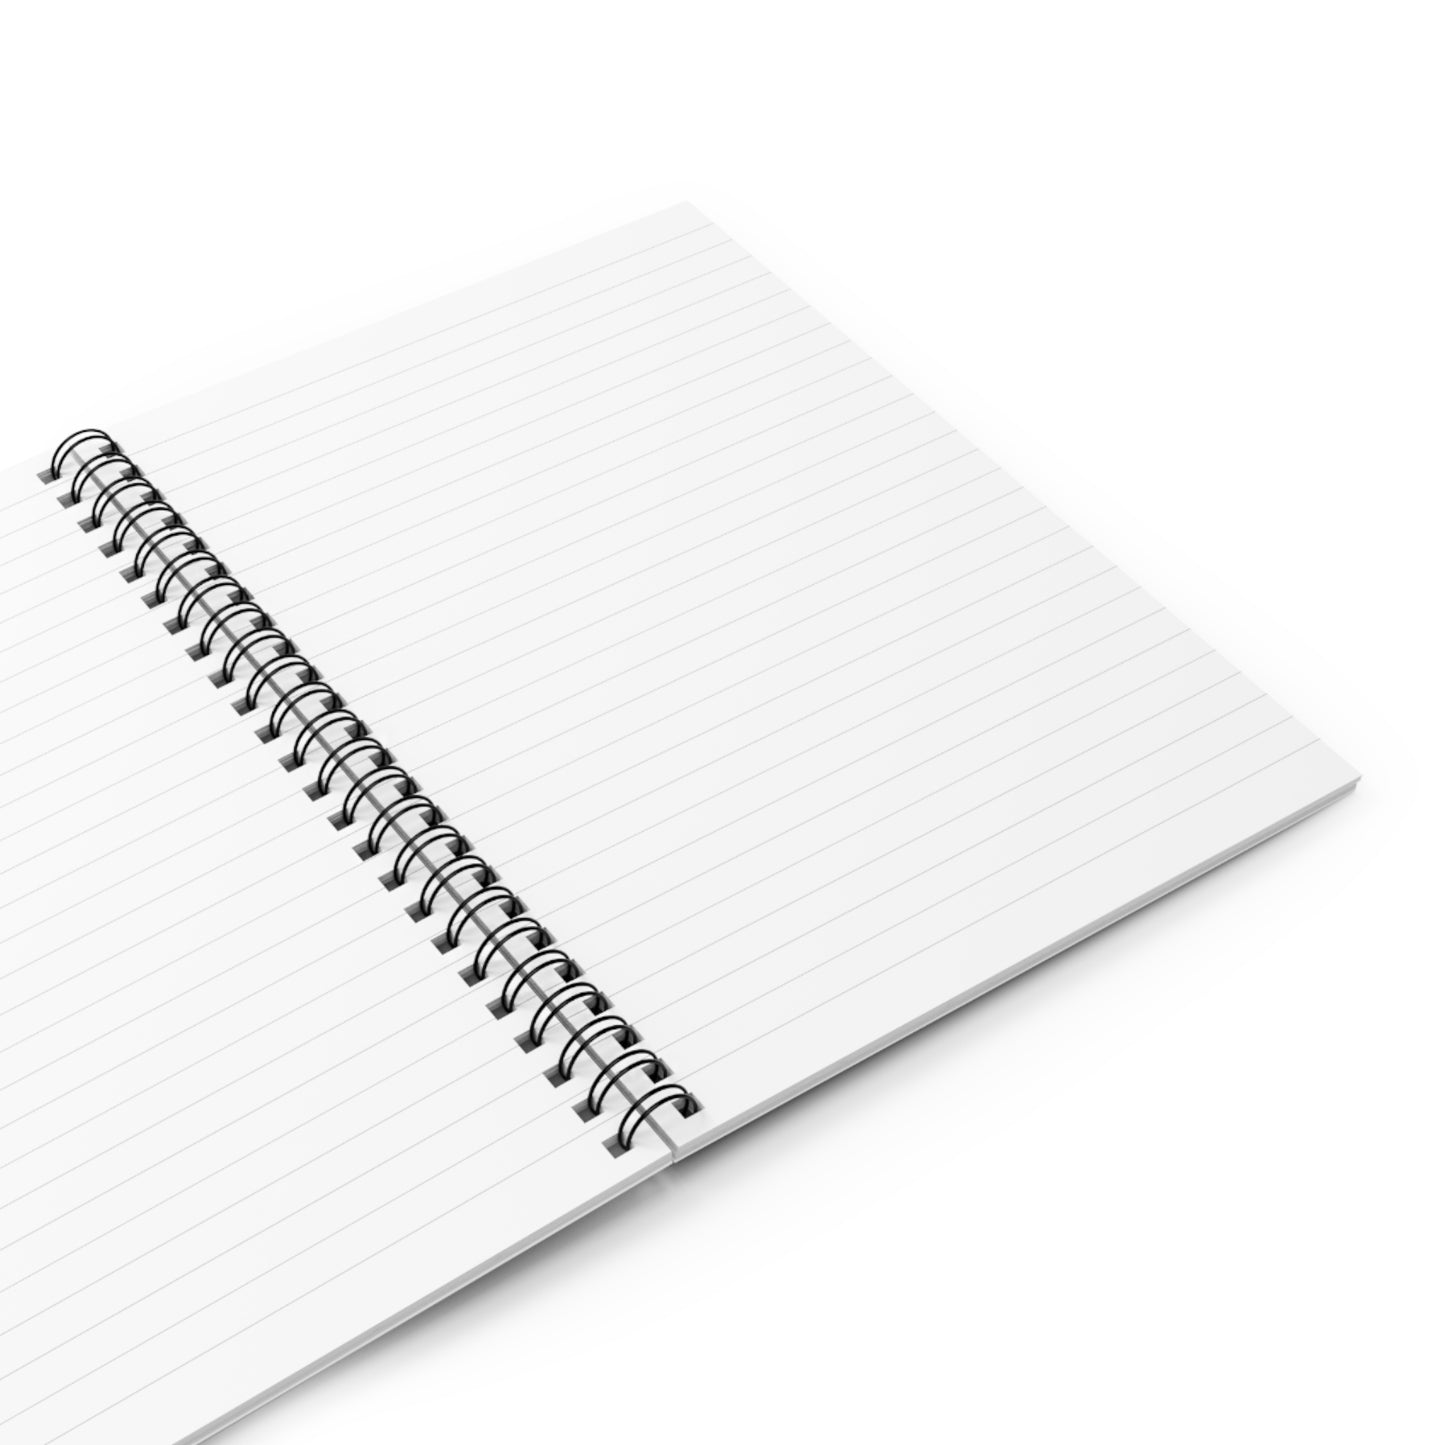 Retro JESUS Journal | Lined Spiral Notebook